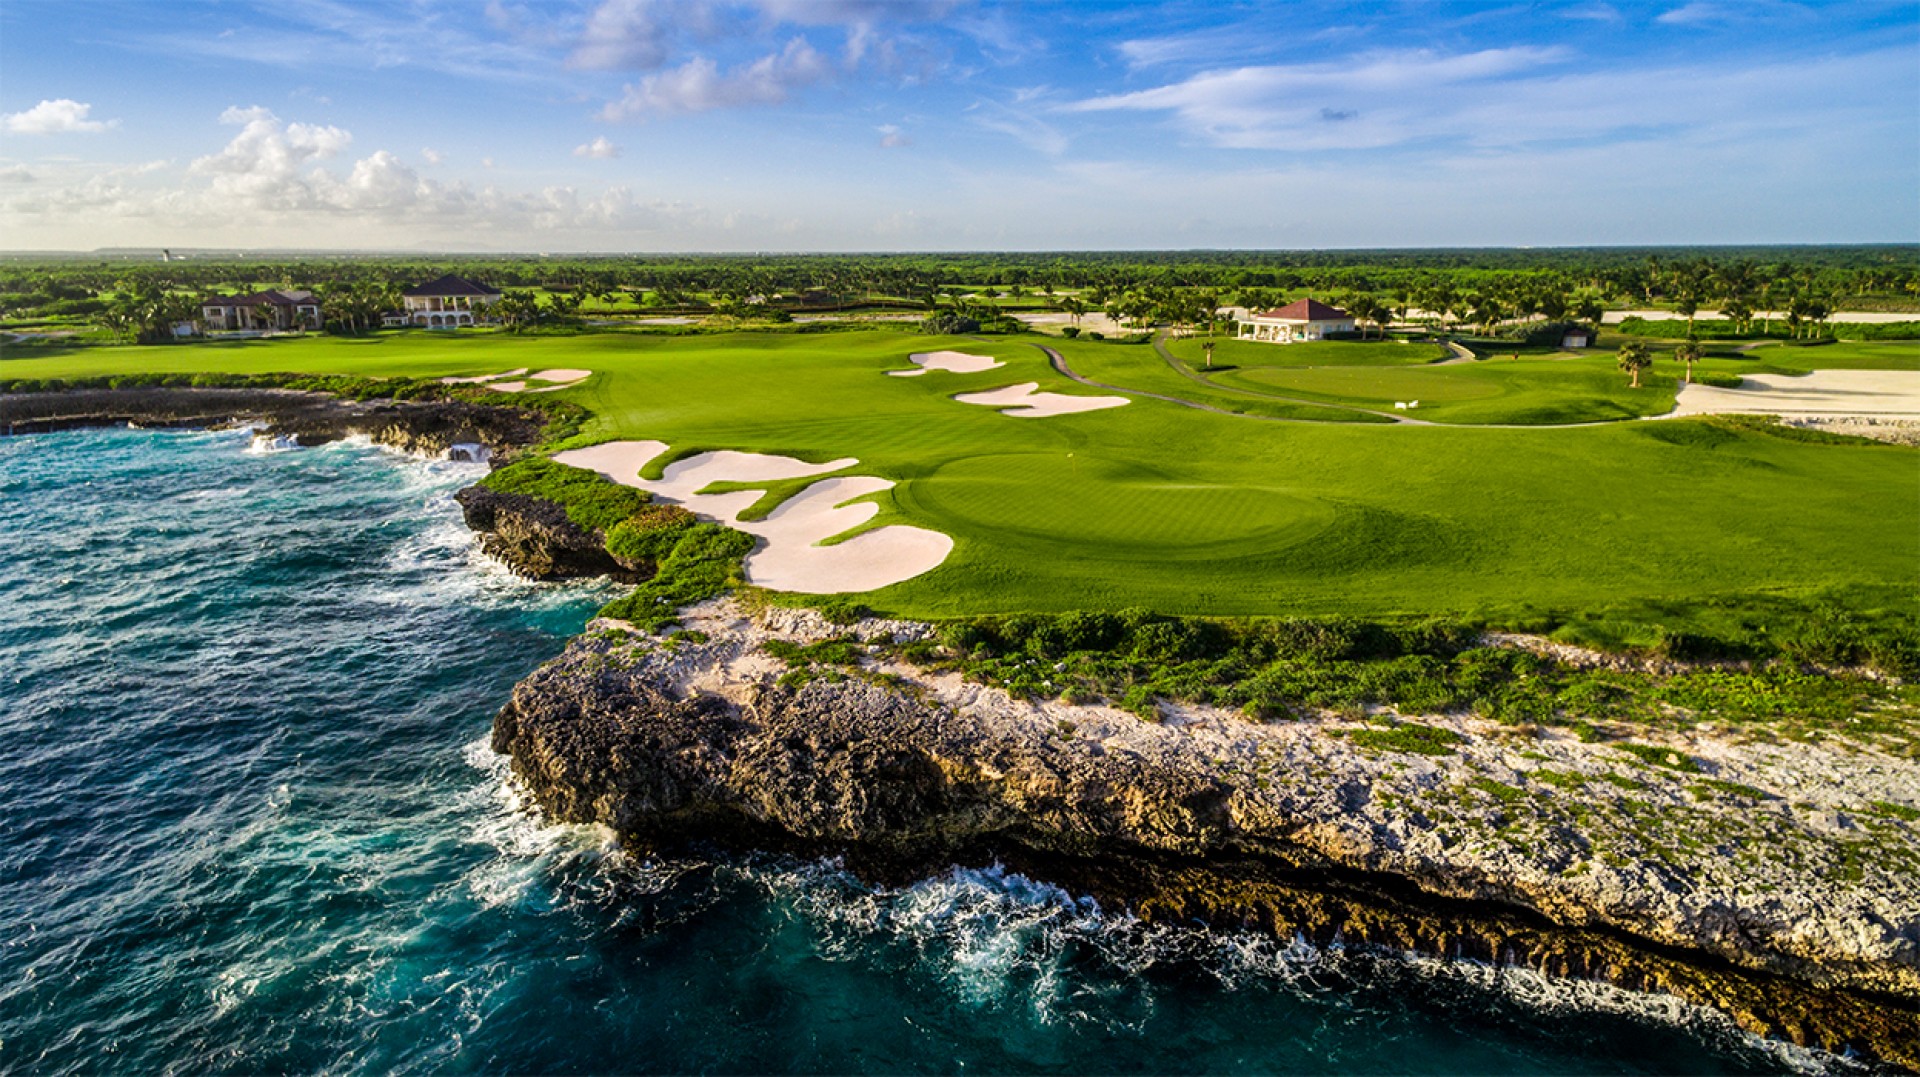 Corales Golf Club a PGA Tour Stop, Bucket List Golf, Play Now Golf